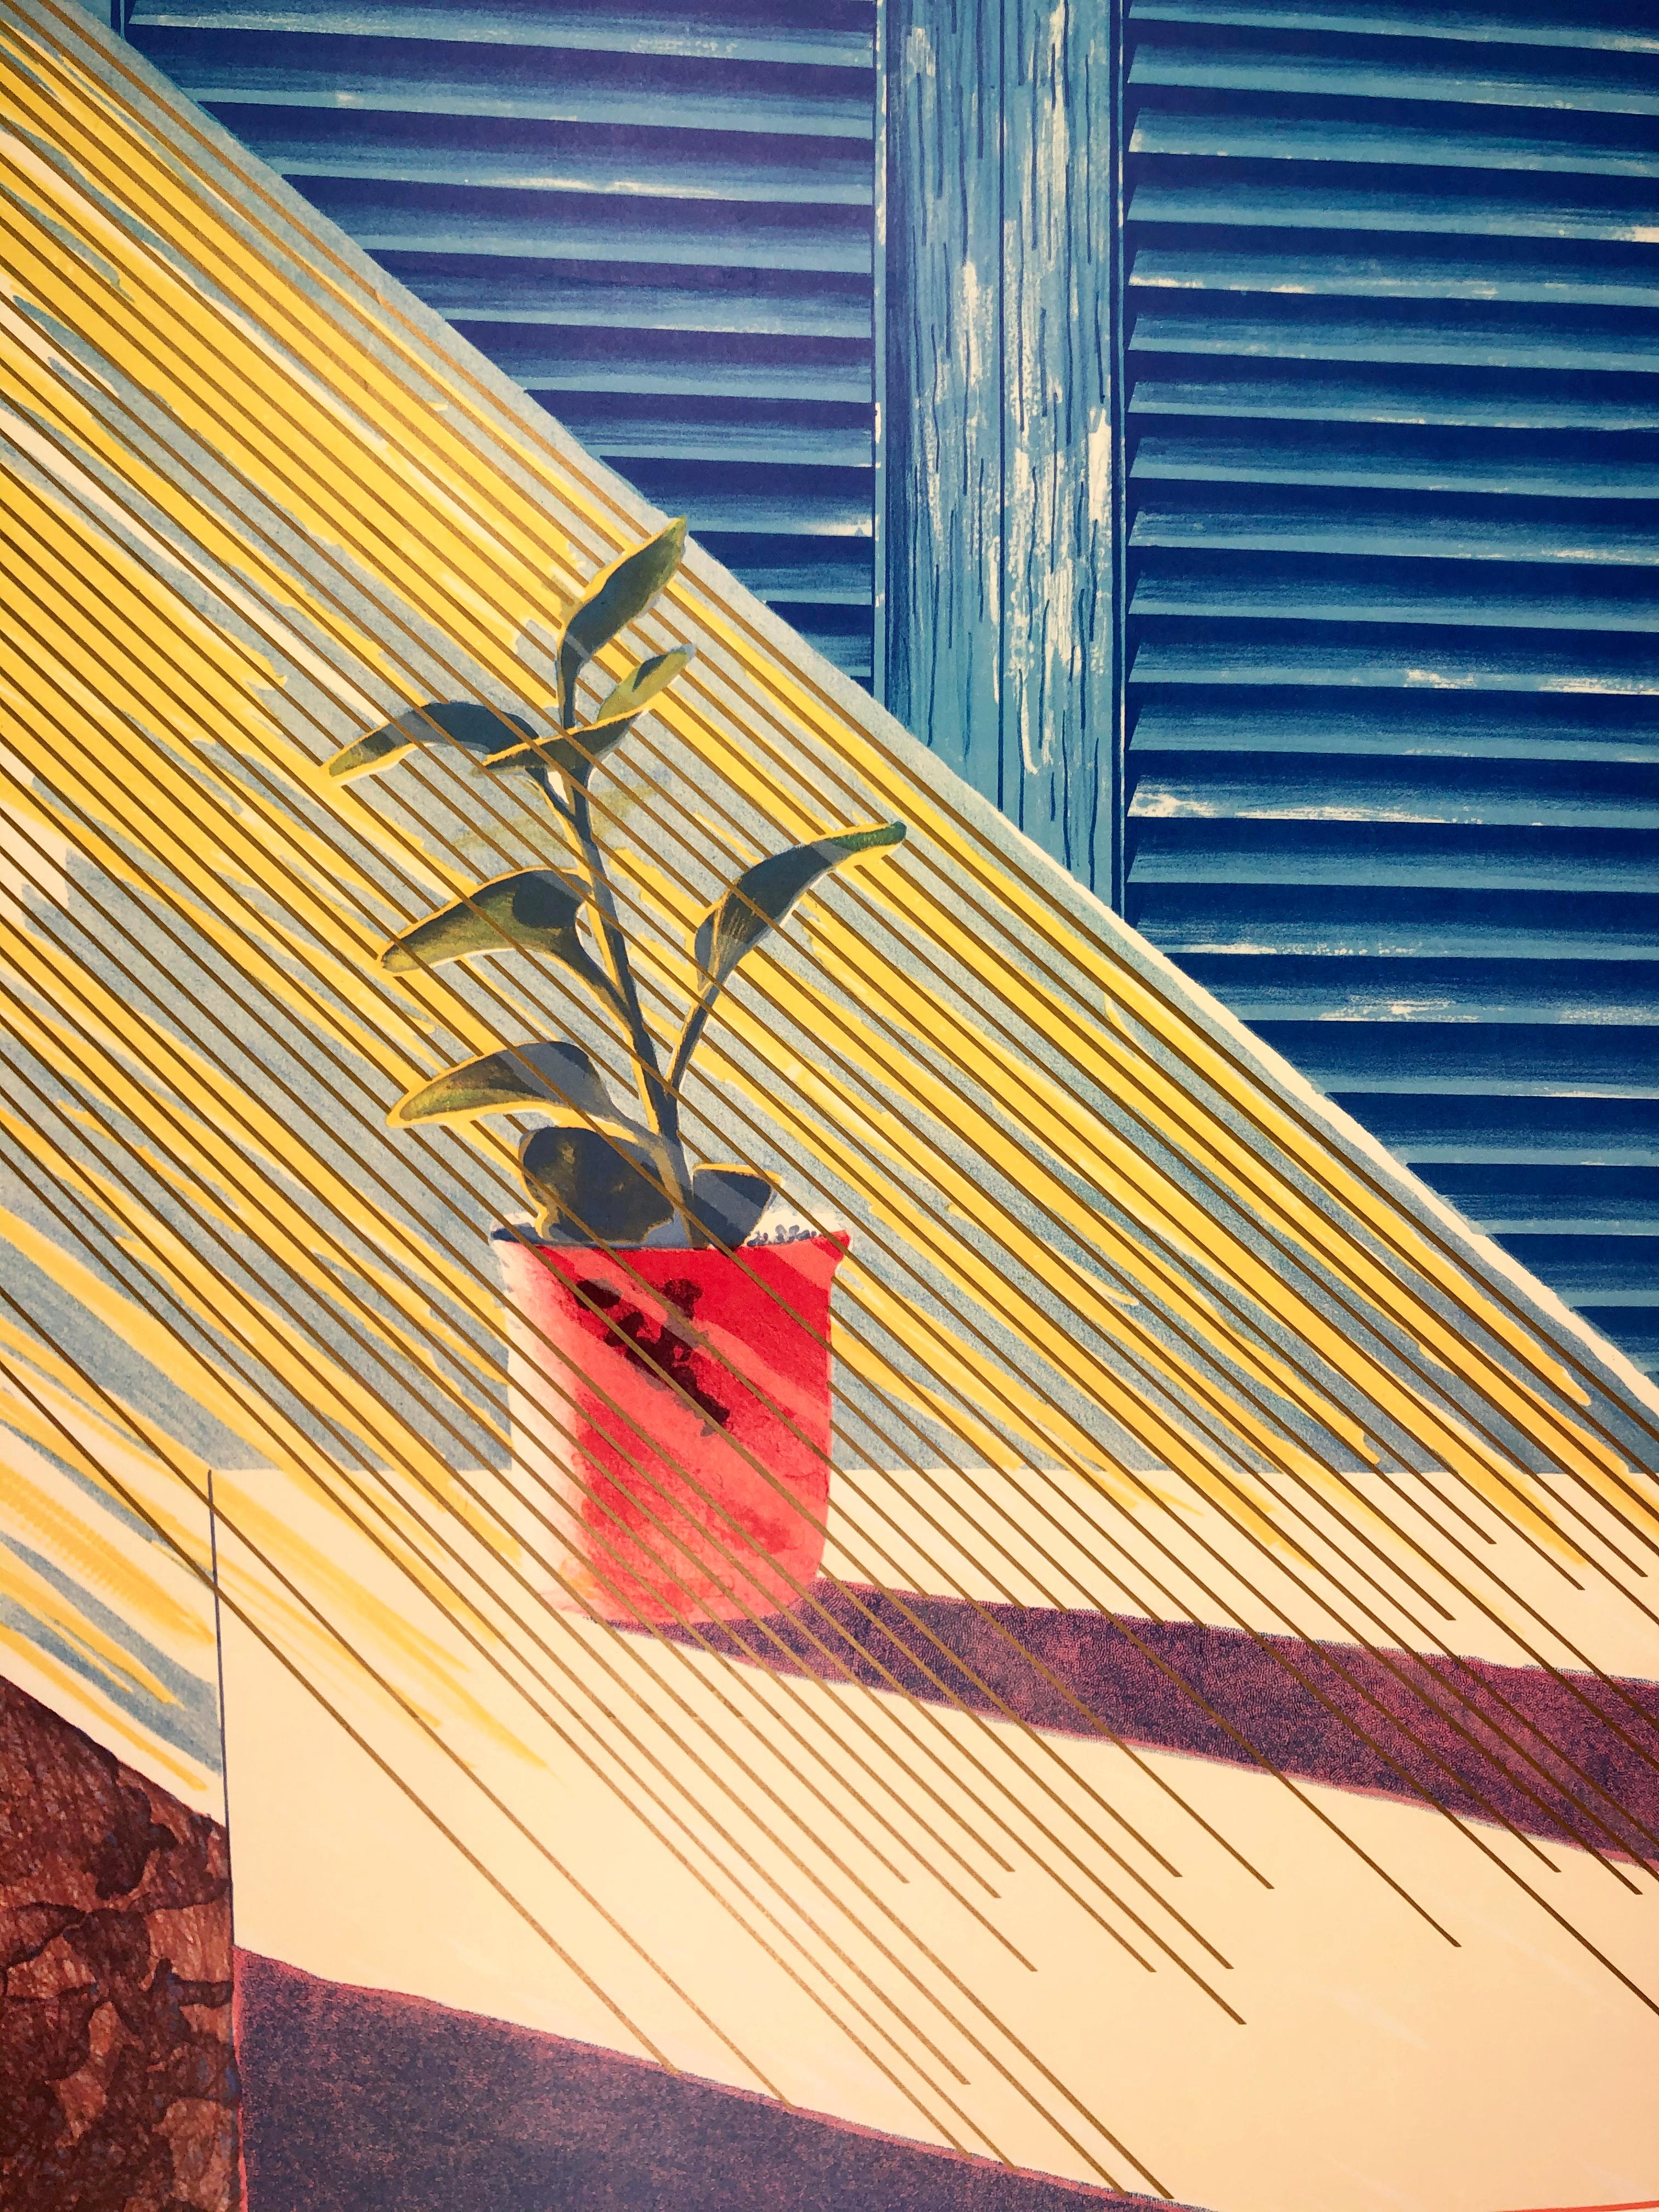 Vintage Hockney poster Midland Group 1979 plant still life with golden sunshine  - Print by David Hockney